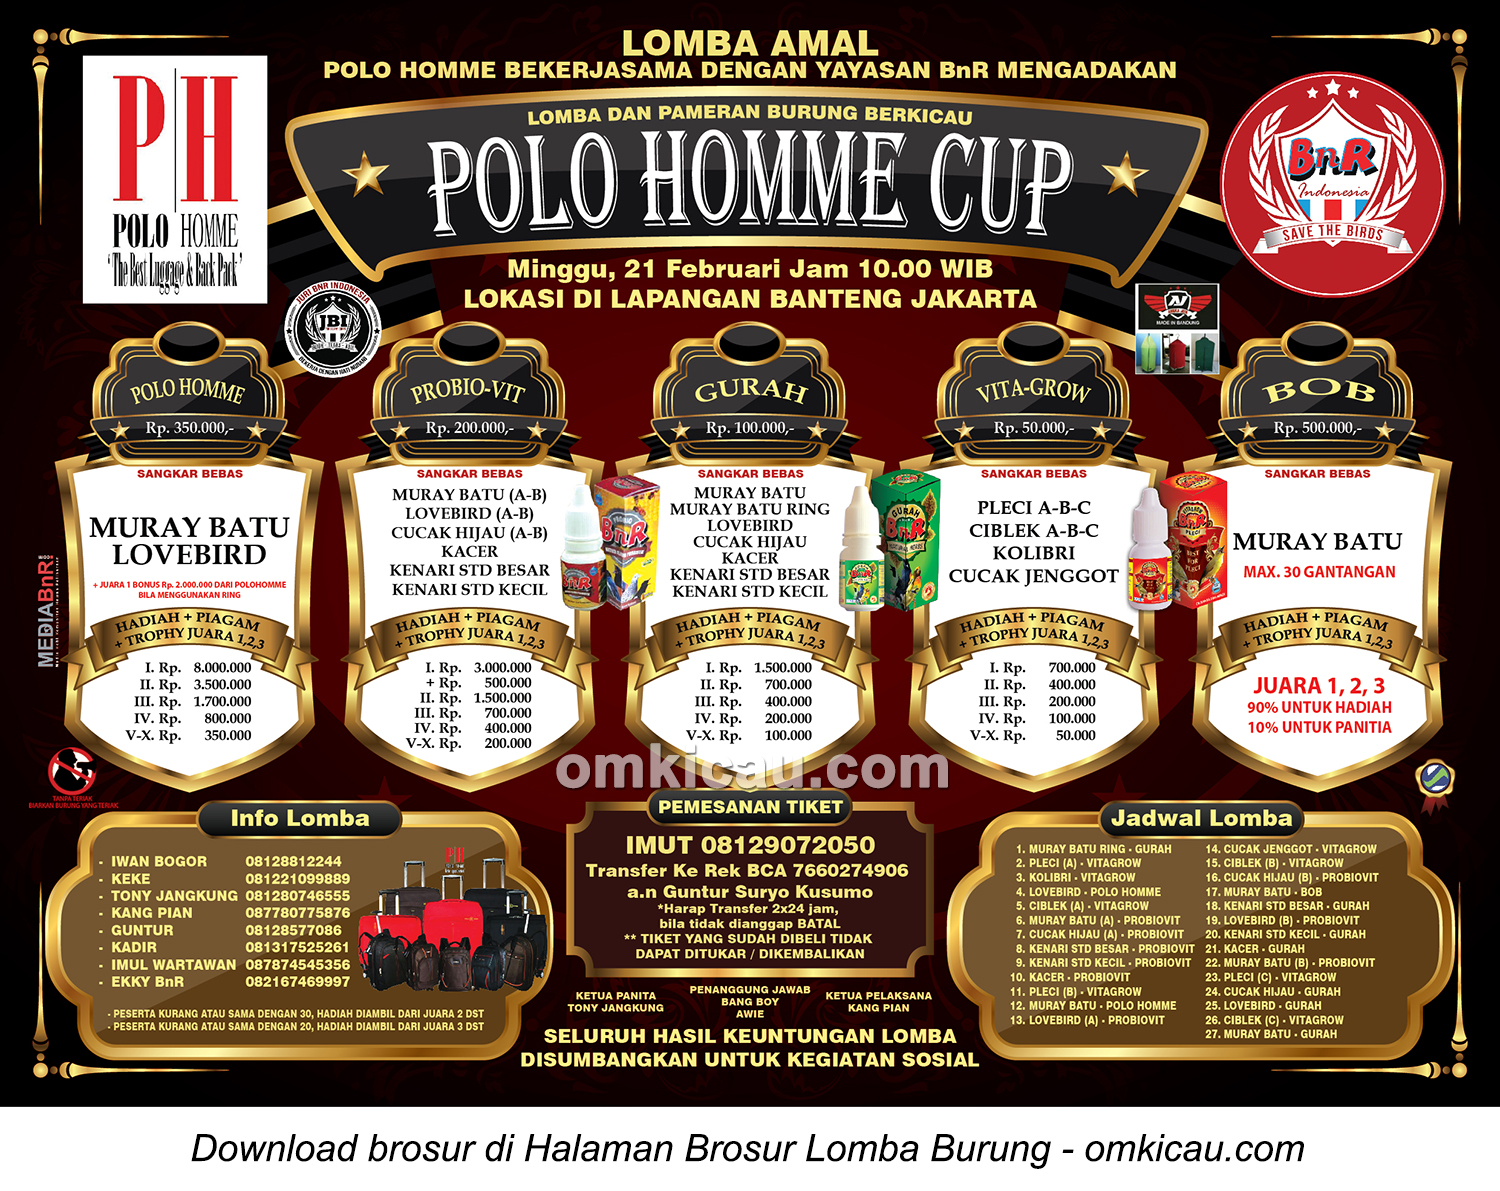 Brosur Lomba Burung Berkicau Polo Homme Cup, Jakarta, Minggu 21 Februari 2016